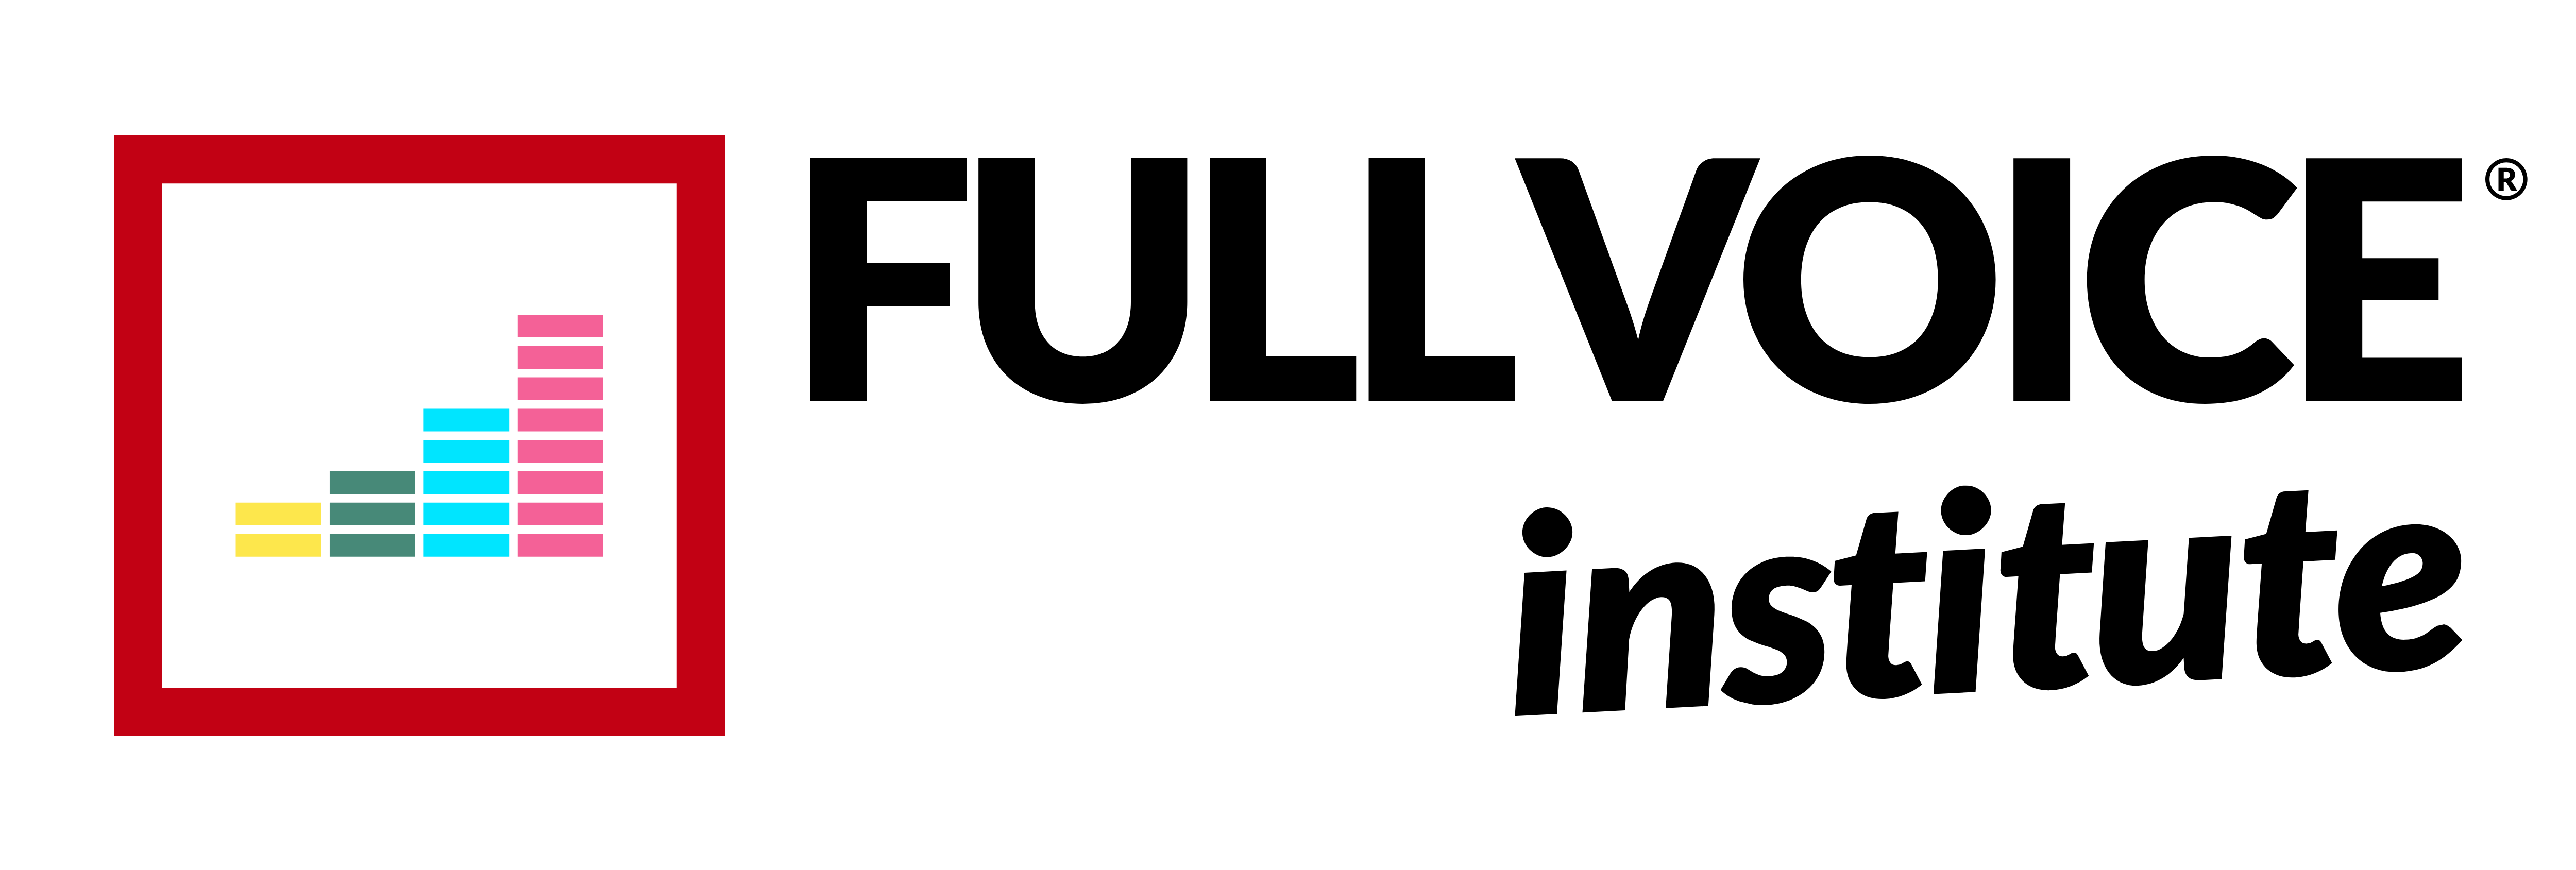 Logo Full Voice Institute - Horizontal Colorido com texto preto